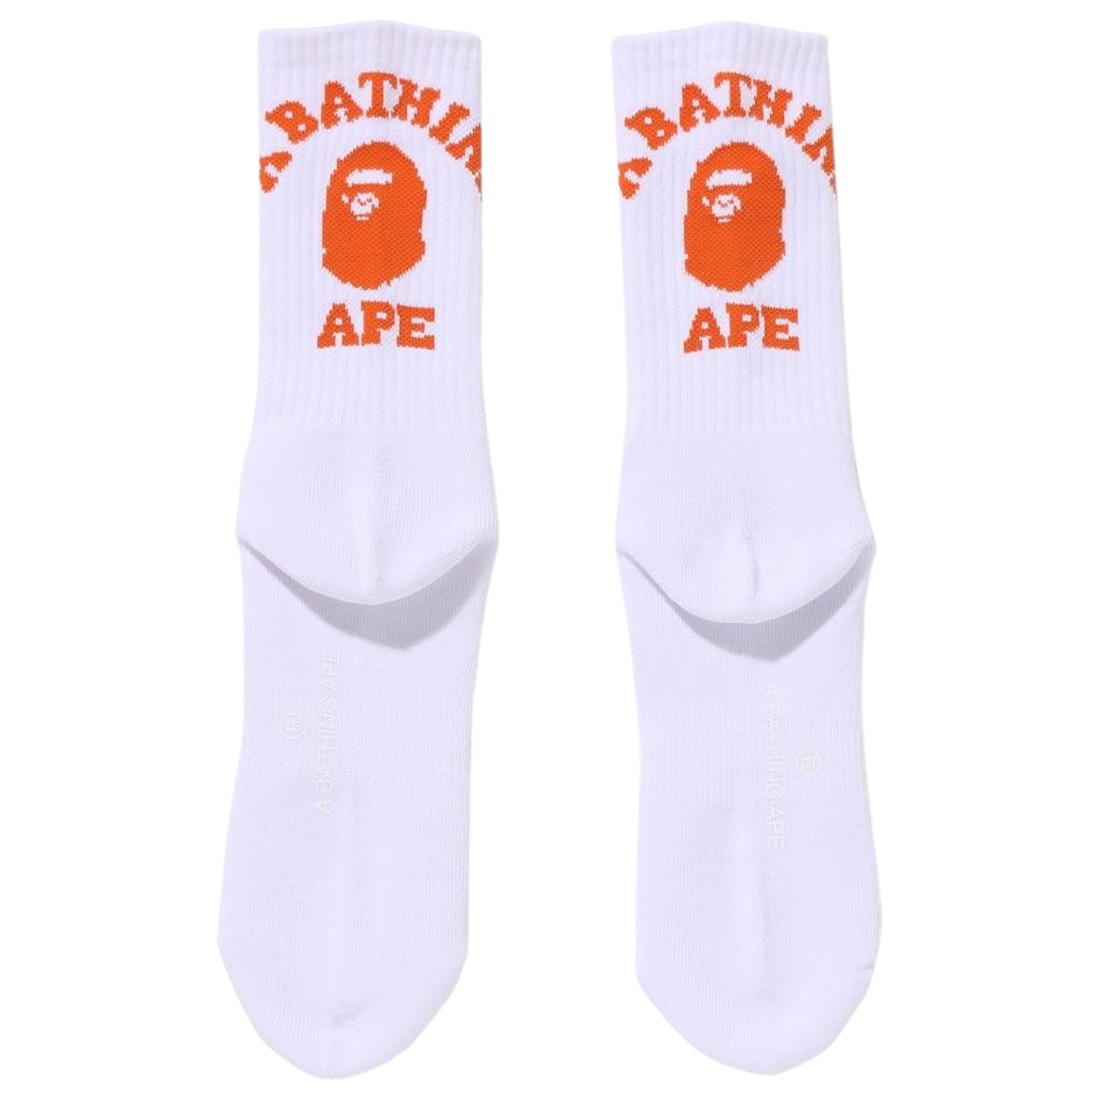 A Bathing Ape Men College Socks (orange)